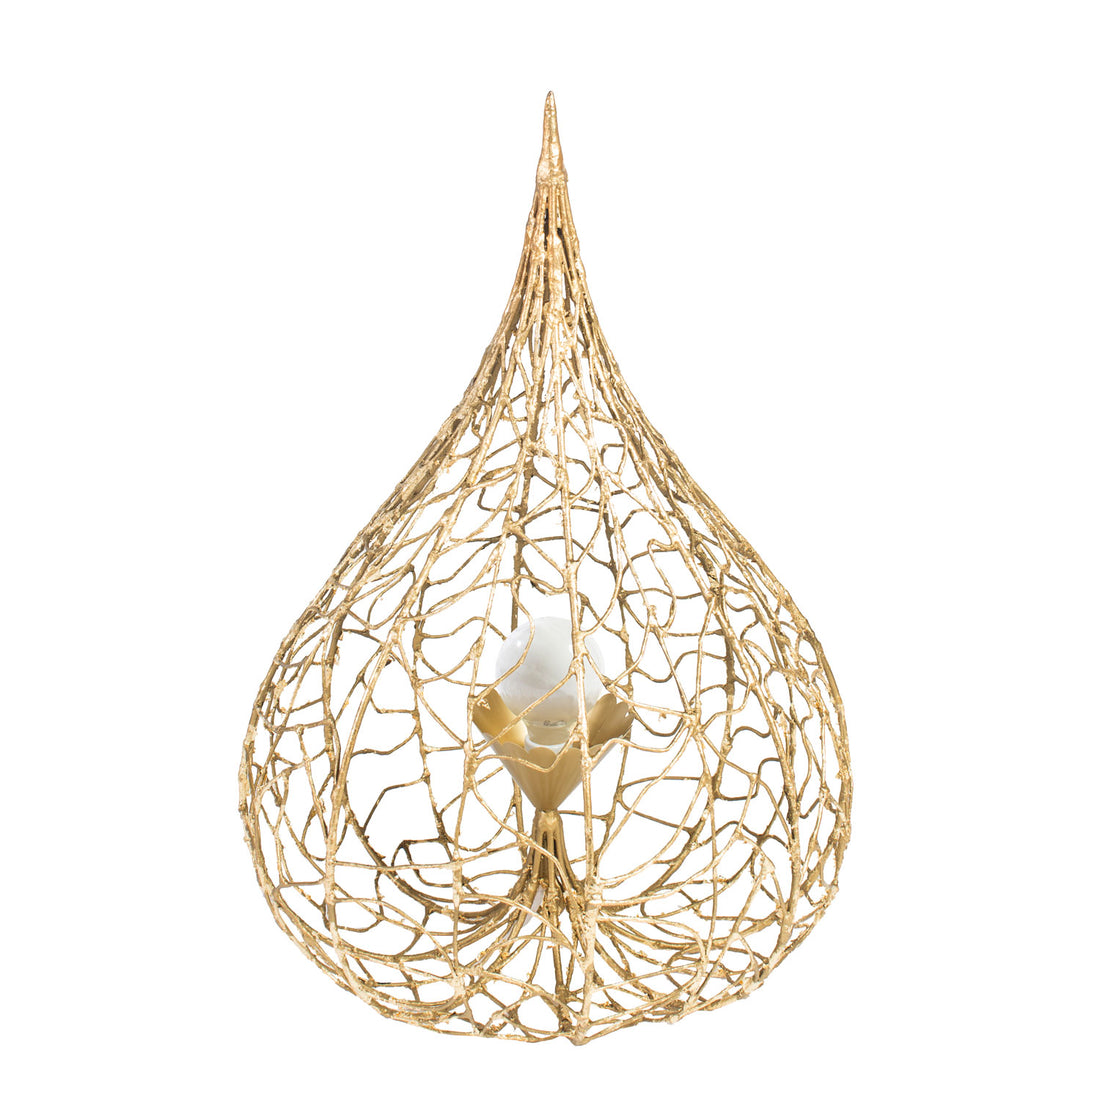 Tida Table Lamp, gold leaf tear drop Physalis design